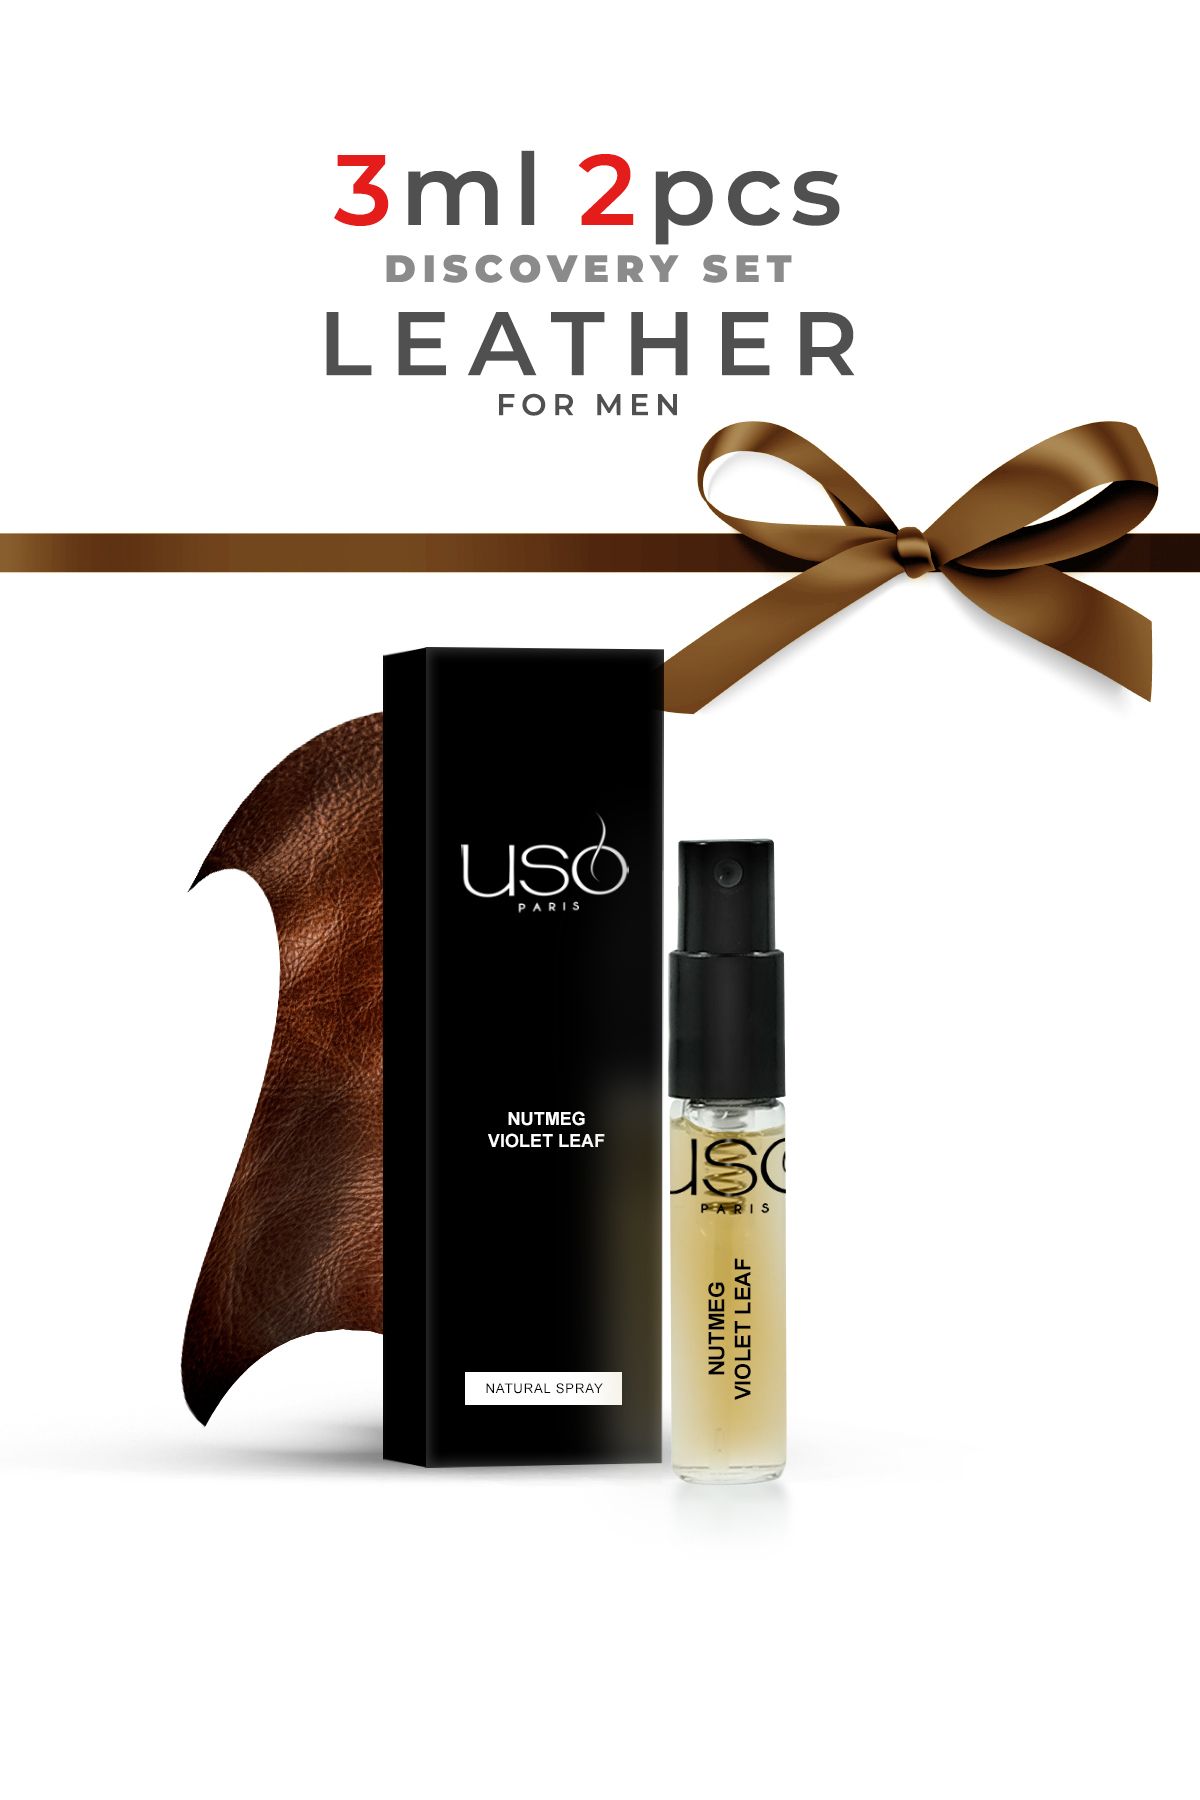 USO Leather Parfum Discovery Set 3ml X 2 Pcs Men